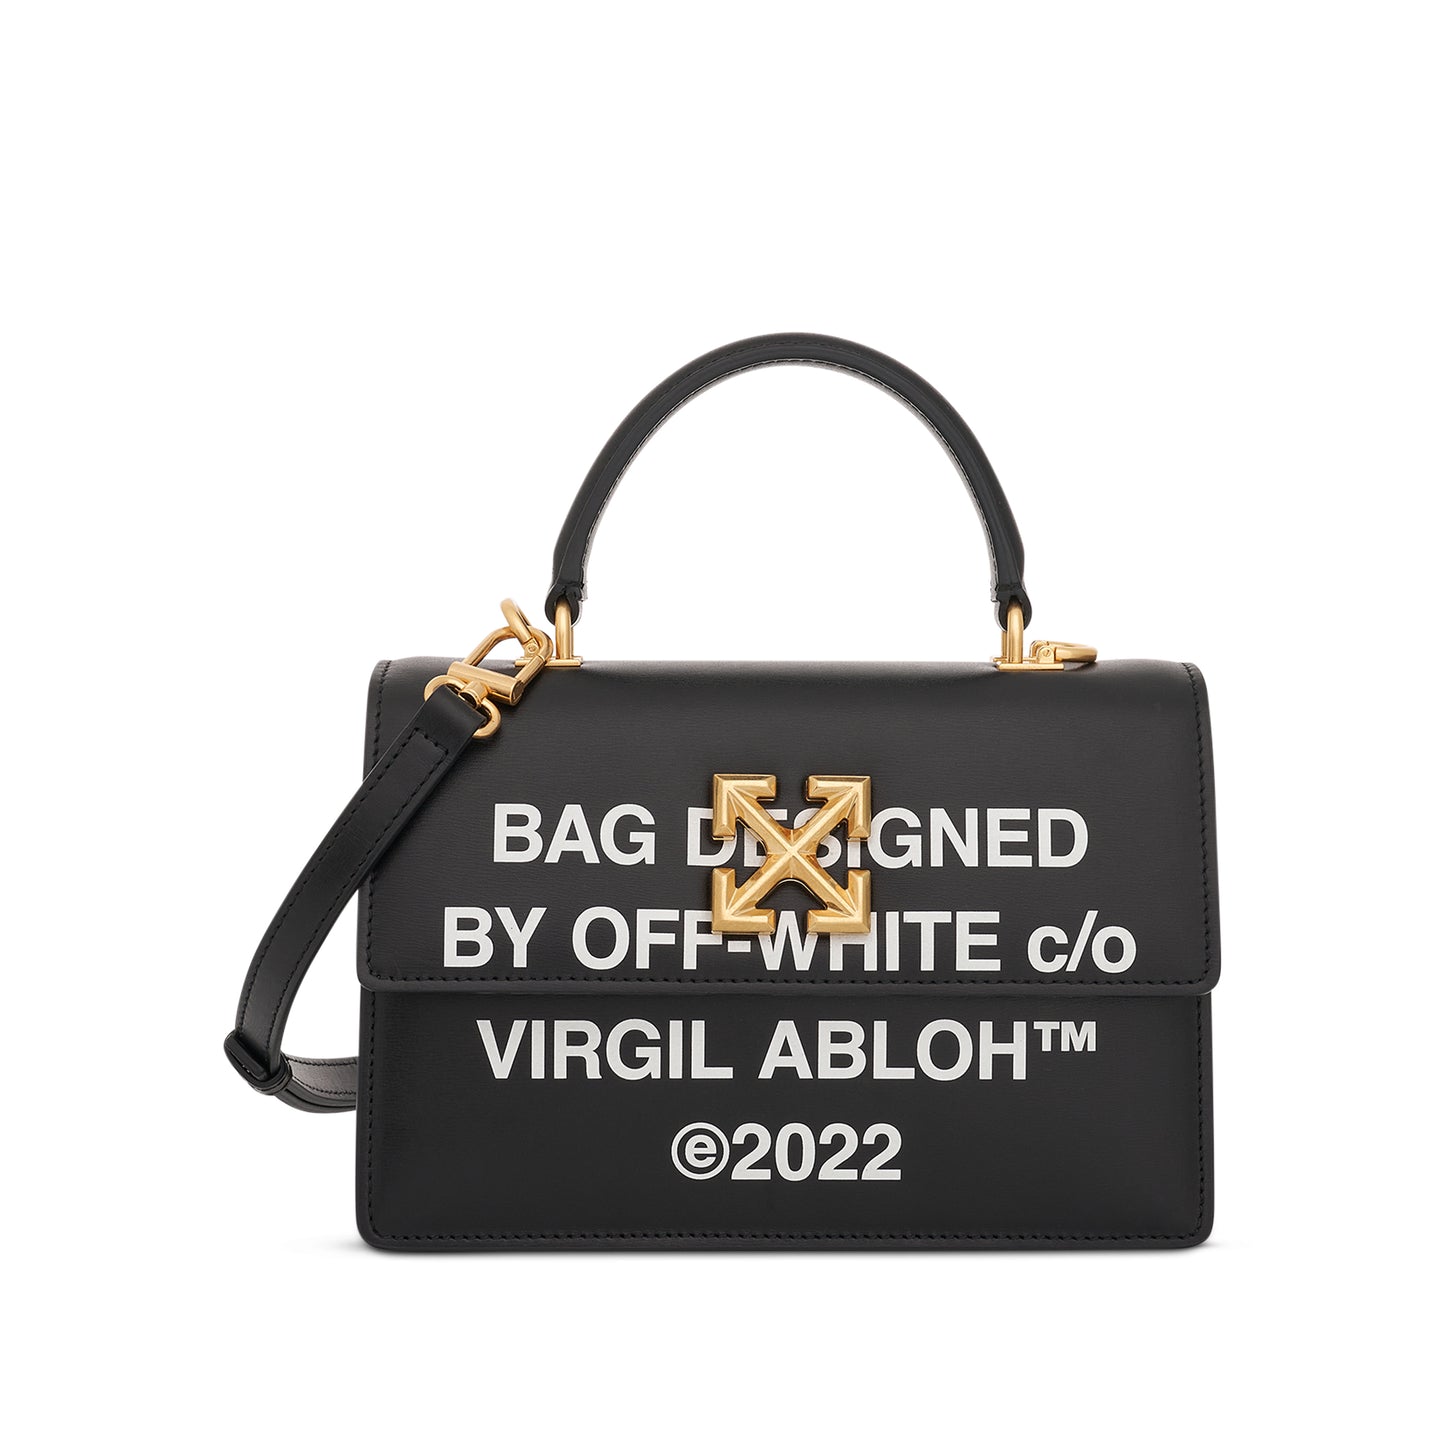 Off-White c/o Virgil Abloh - Women's Jitney 1.4 Vigin Was Here Tote Bag - Black - Leather